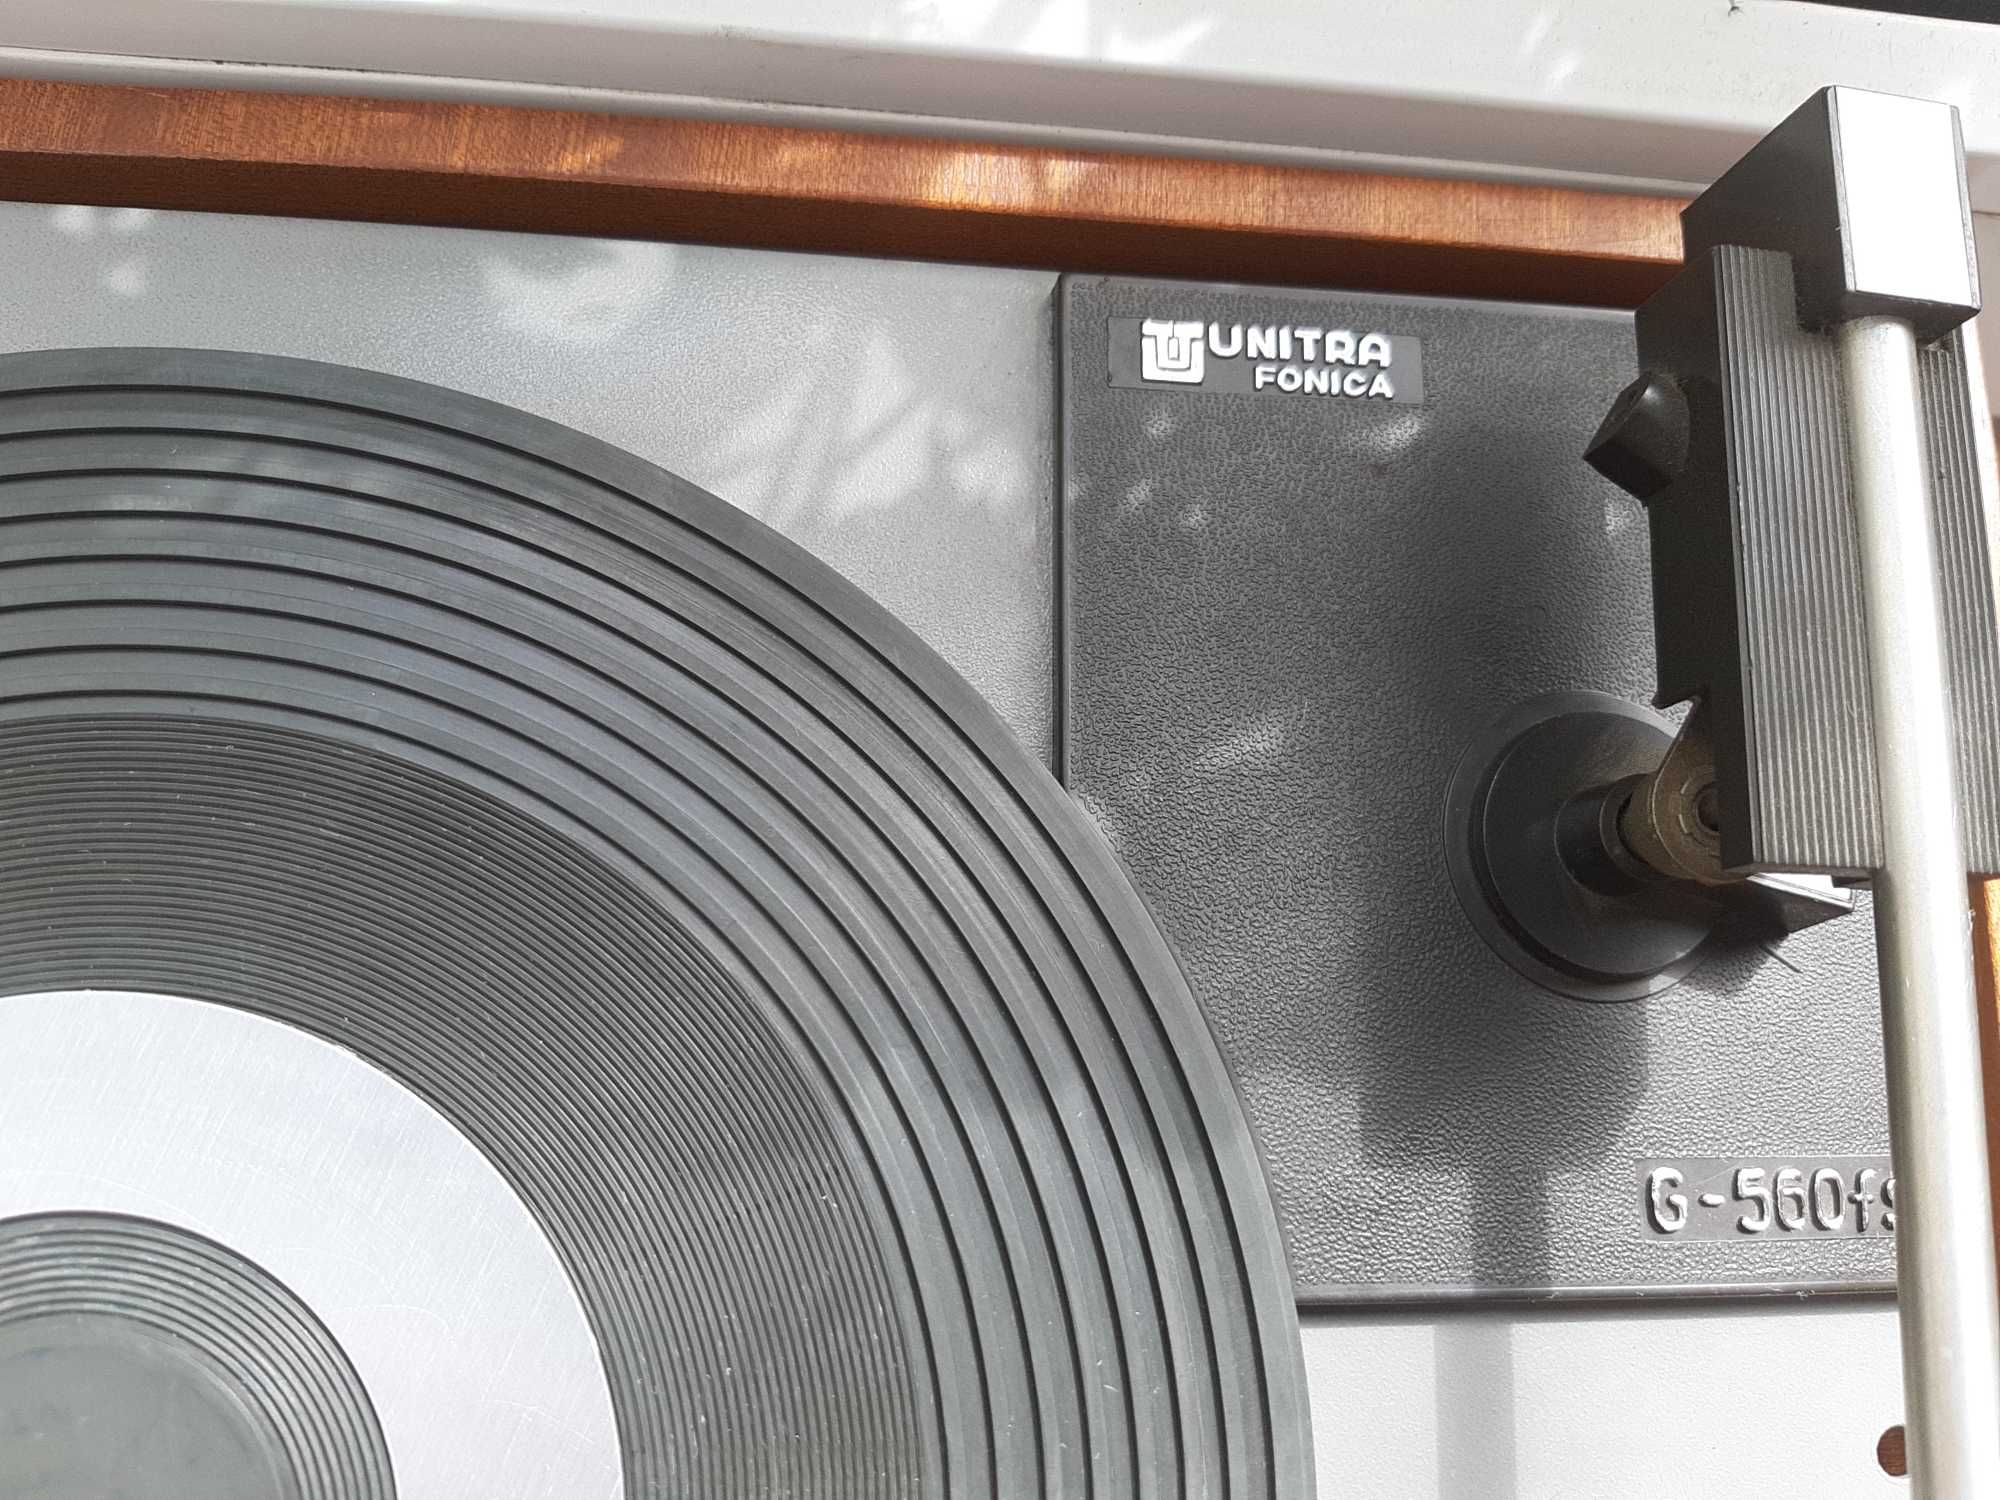 Gramofon Fonica G 560-FS .z lat 80tych.